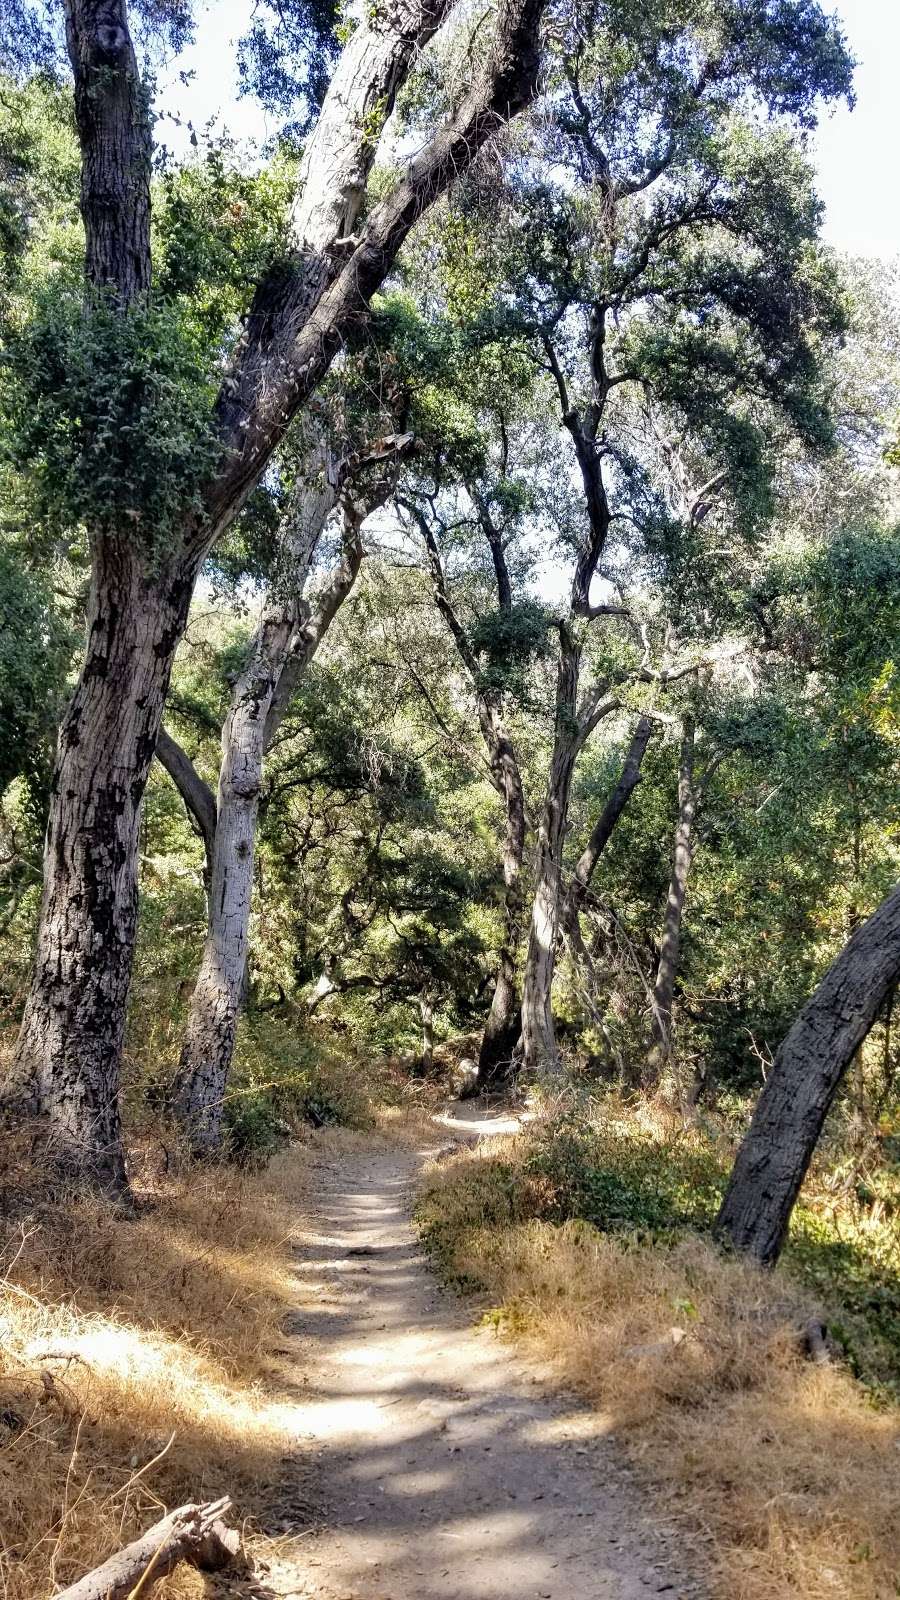 Mt Zion & Sturtevant Trail | Mt Zion Trail, Sierra Madre, CA 91024, USA